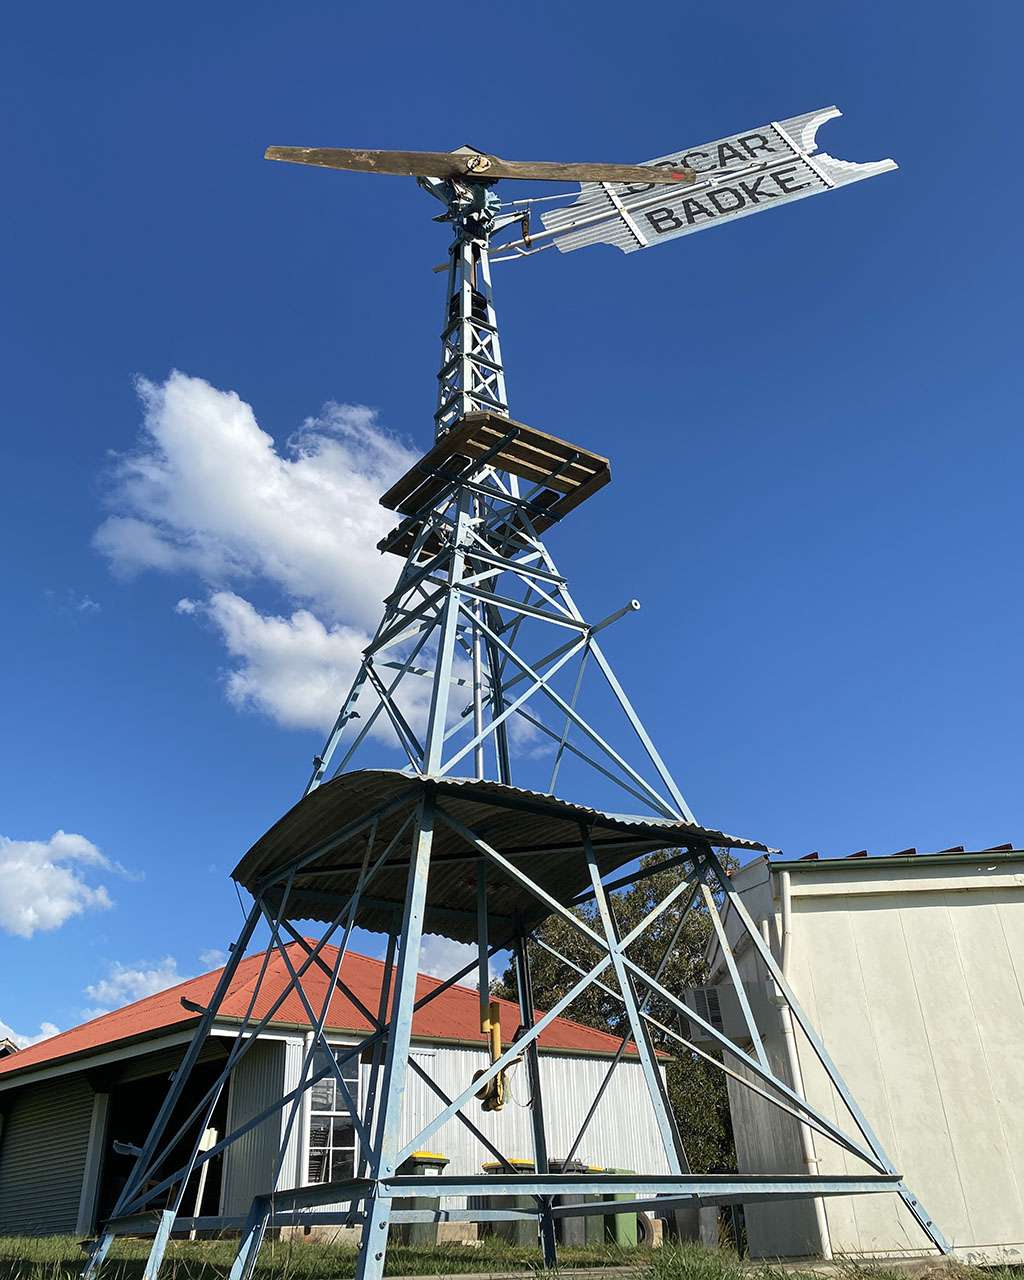 Oscar Badke Wind Power Generator at the Templin Historical Museum